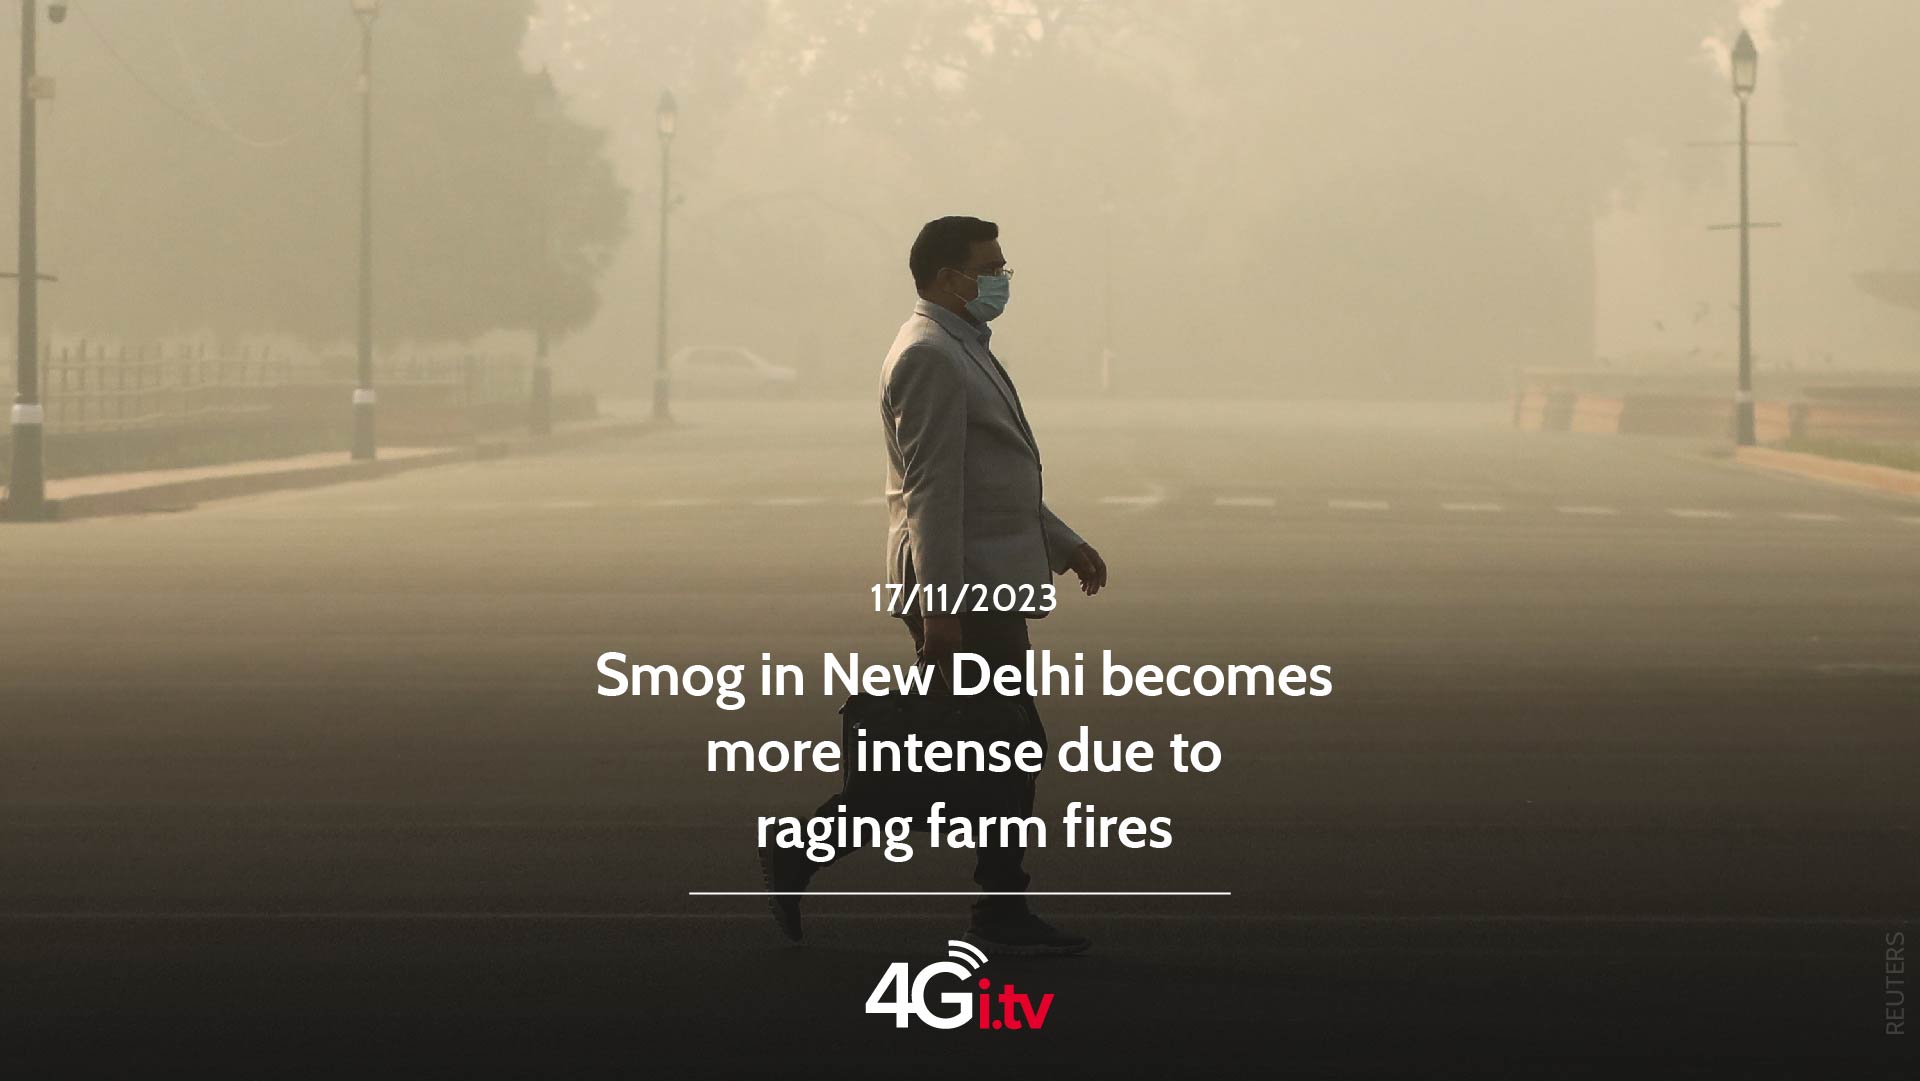 Подробнее о статье Smog in New Delhi becomes more intense due to raging farm fires